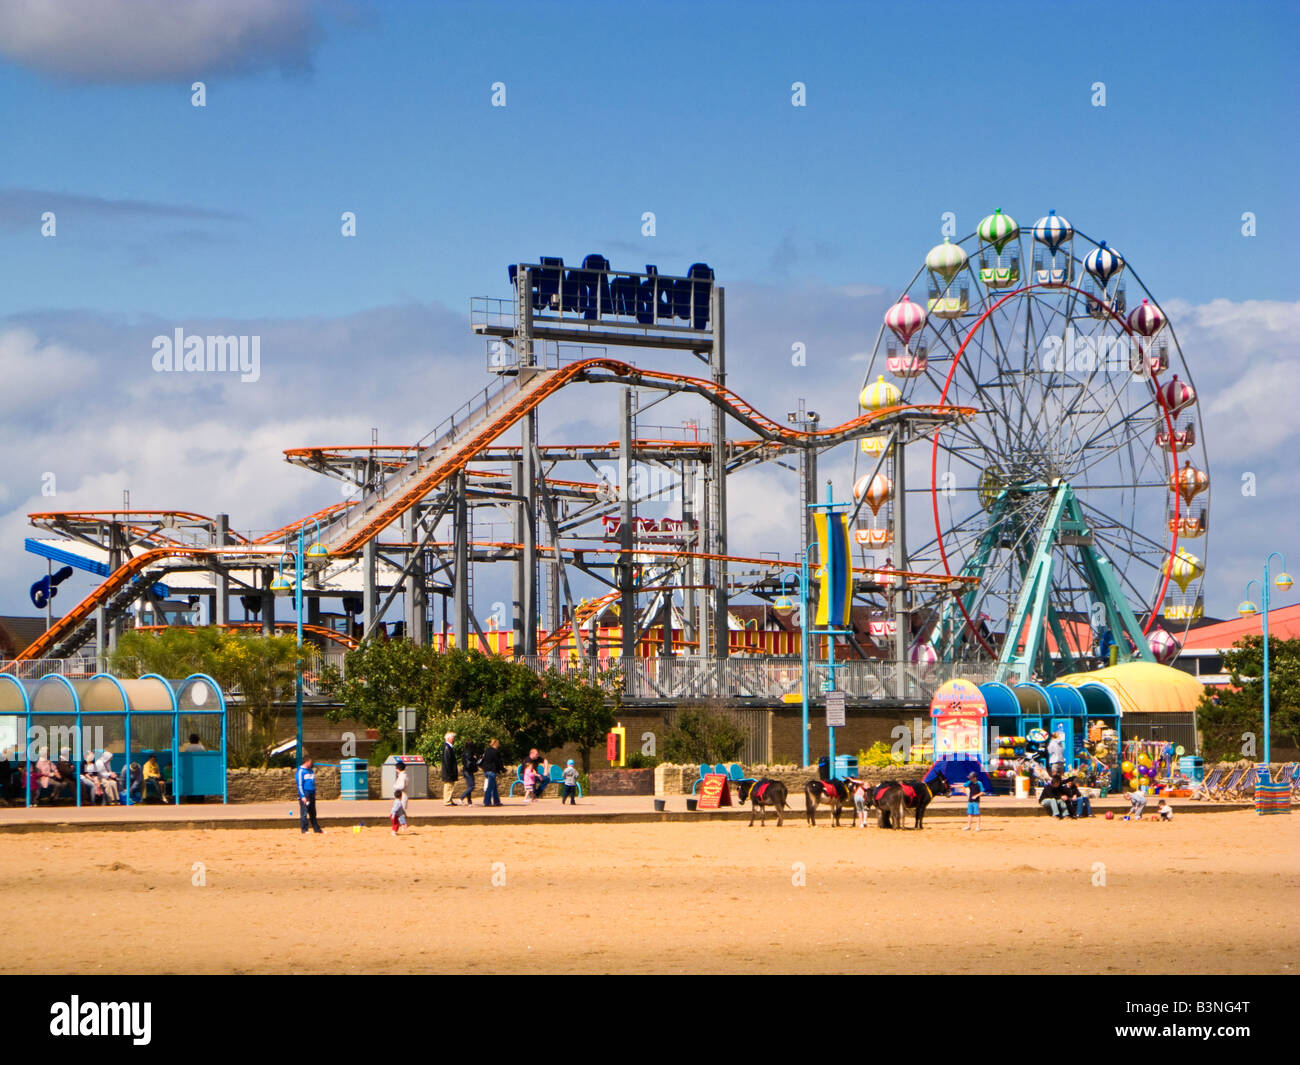 Skegness pleasure beach fairground amusement park on the beach, Skegness, Lincolnshire, England, UK Stock Photo